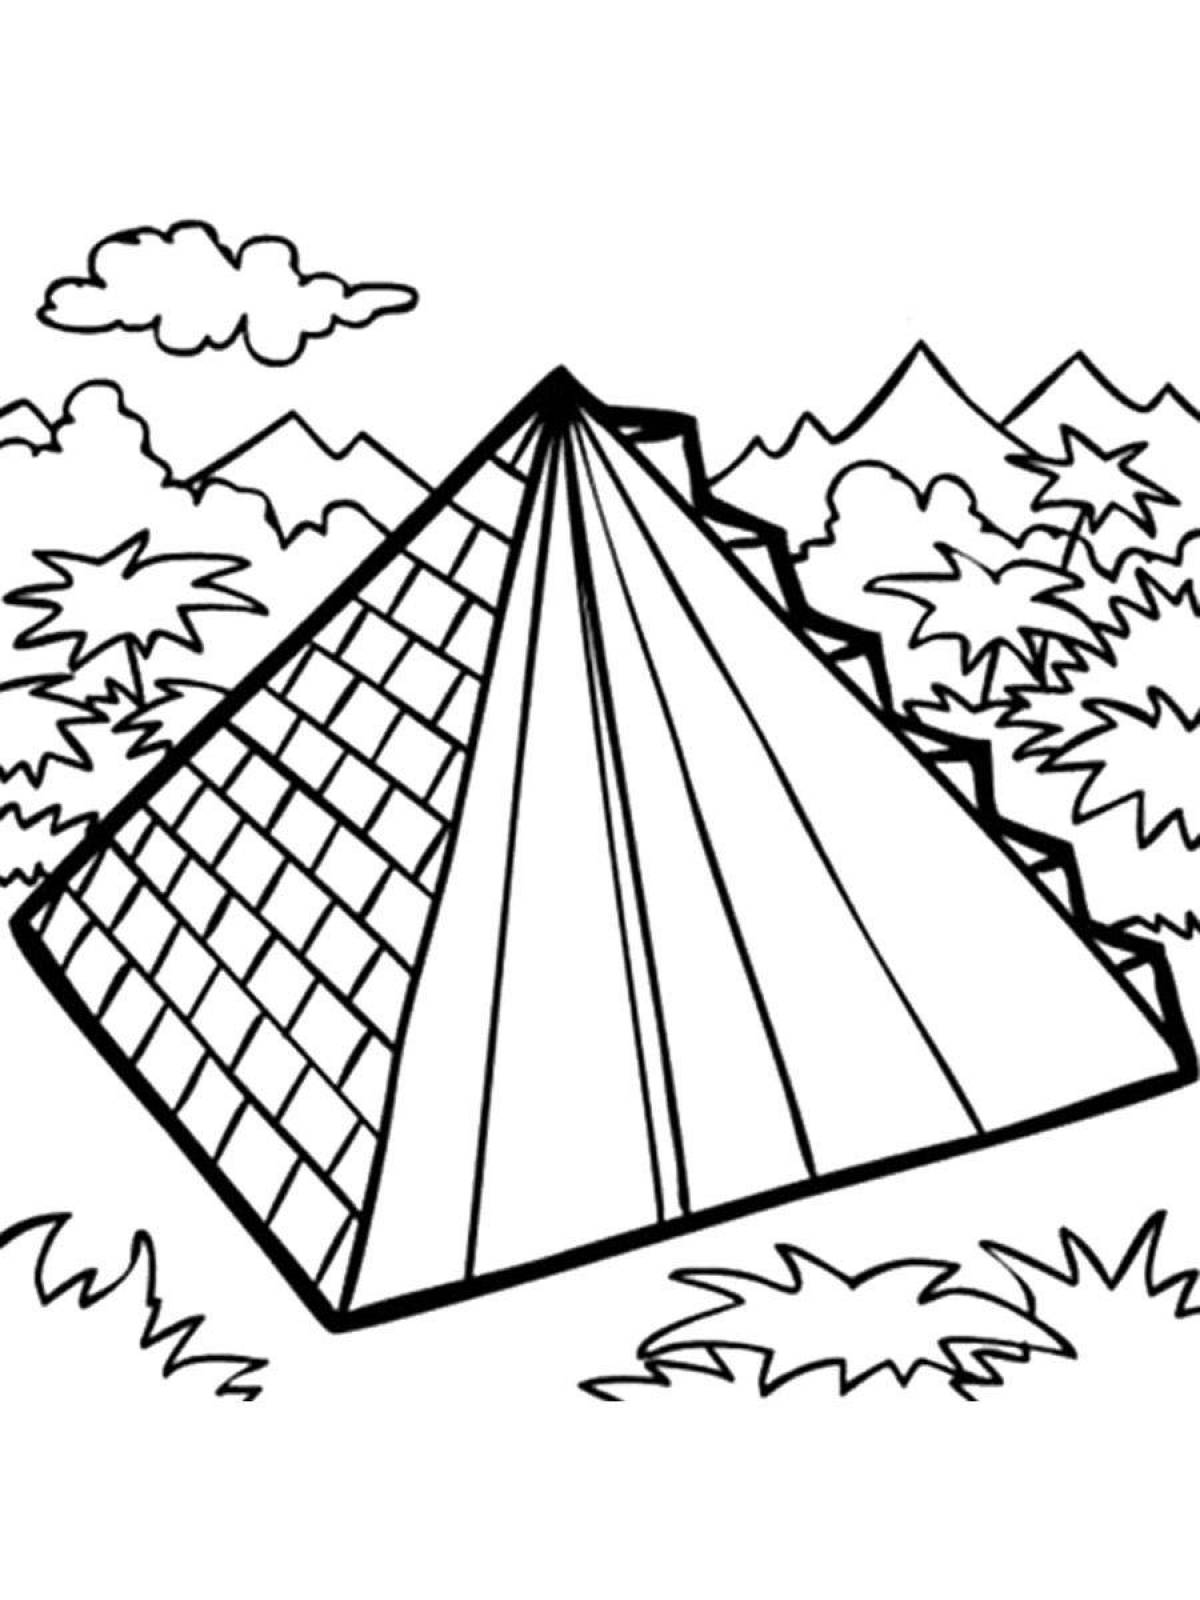 Домик пирамида рисунок